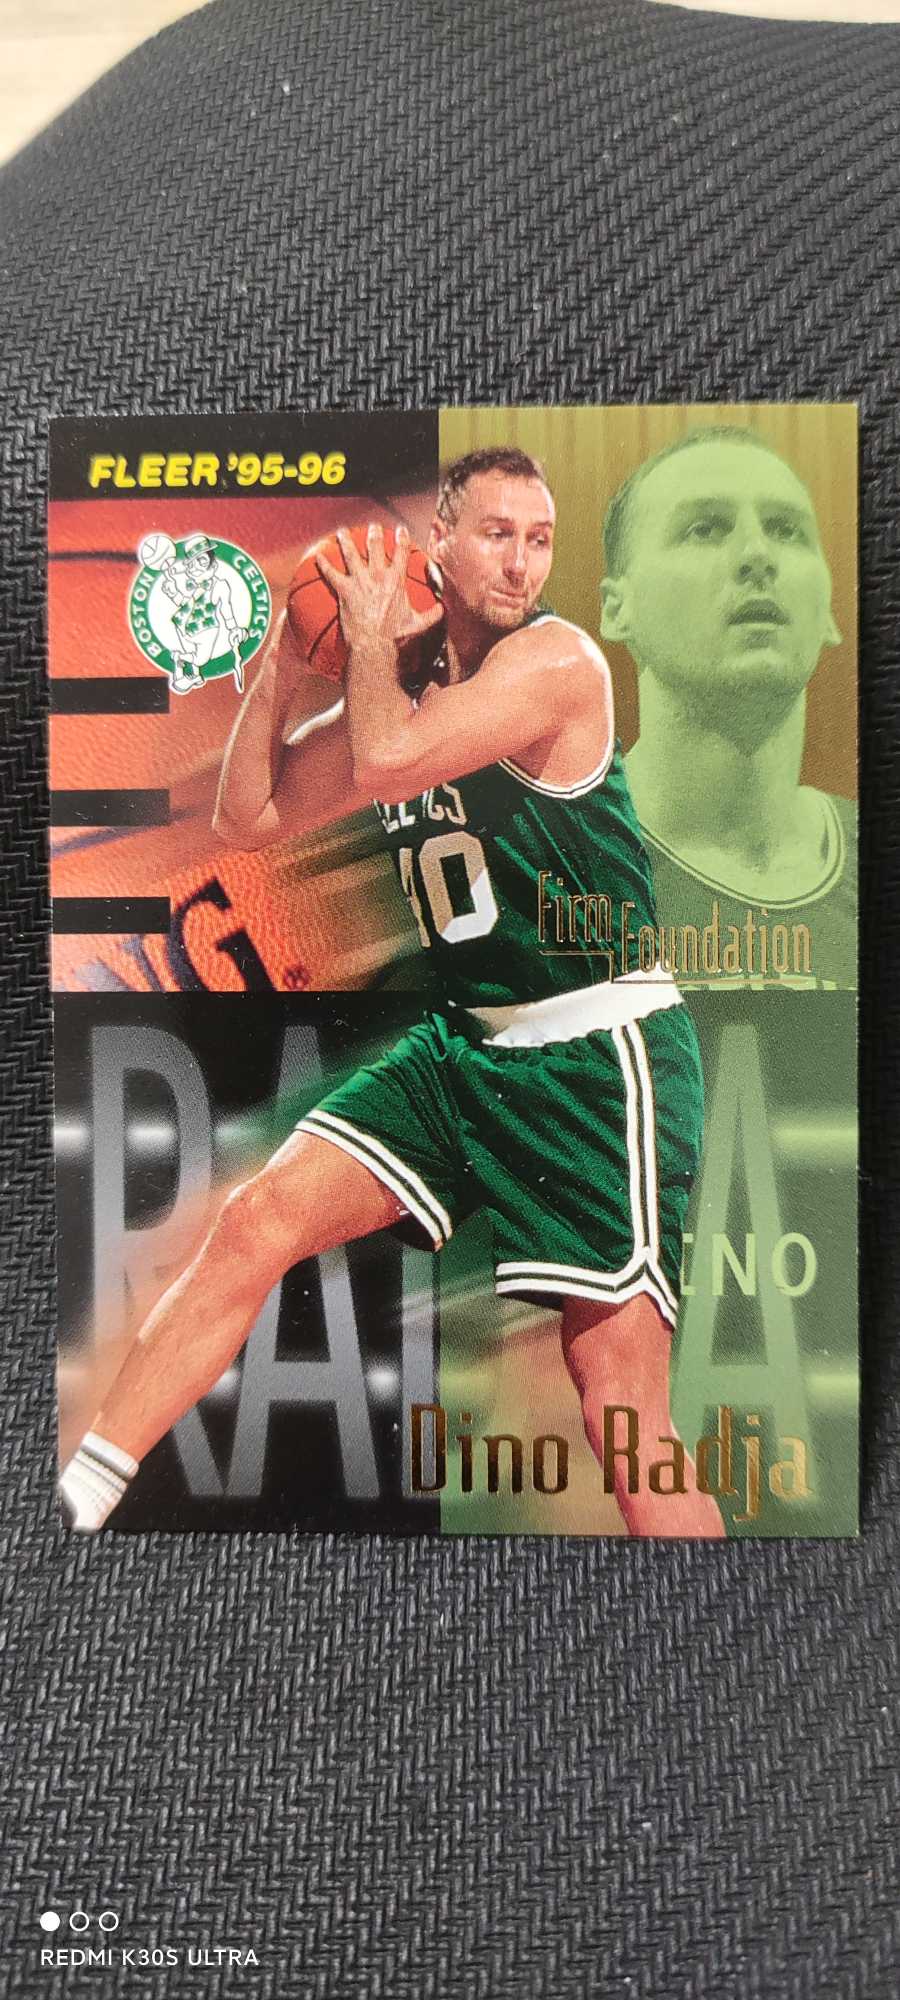 1995-96 Fleer Basketball Dino Radja 迪诺 拉迪亚 凯尔特人队 收藏必备 可累计